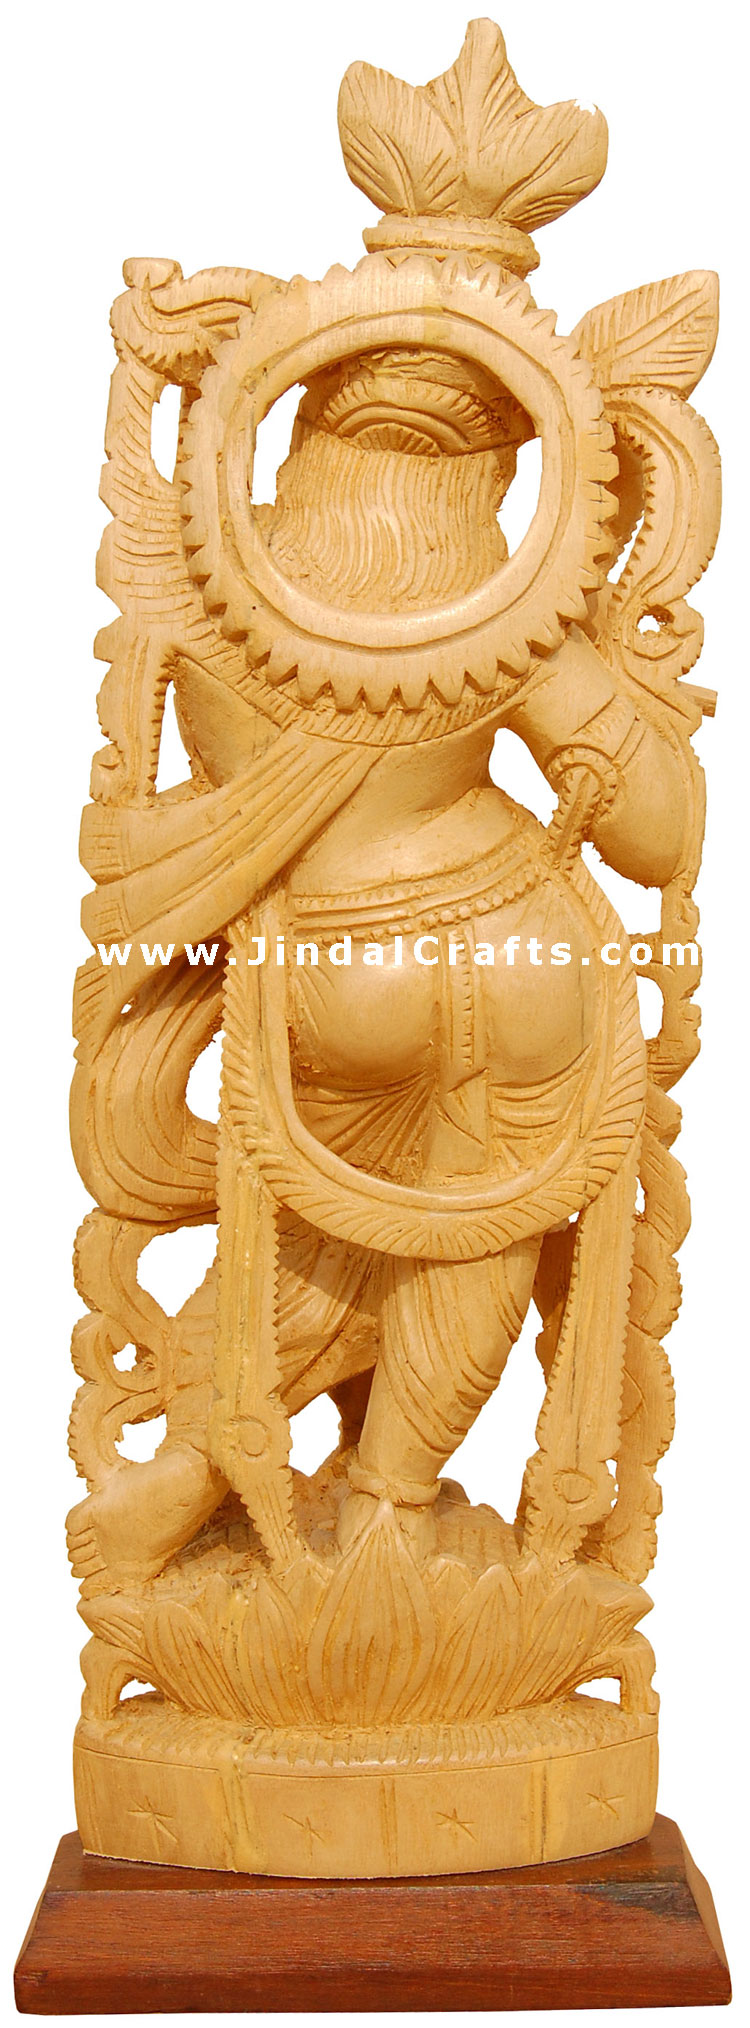 Handcrafted Wooden Lord Krishna Hindu Sculpture Art